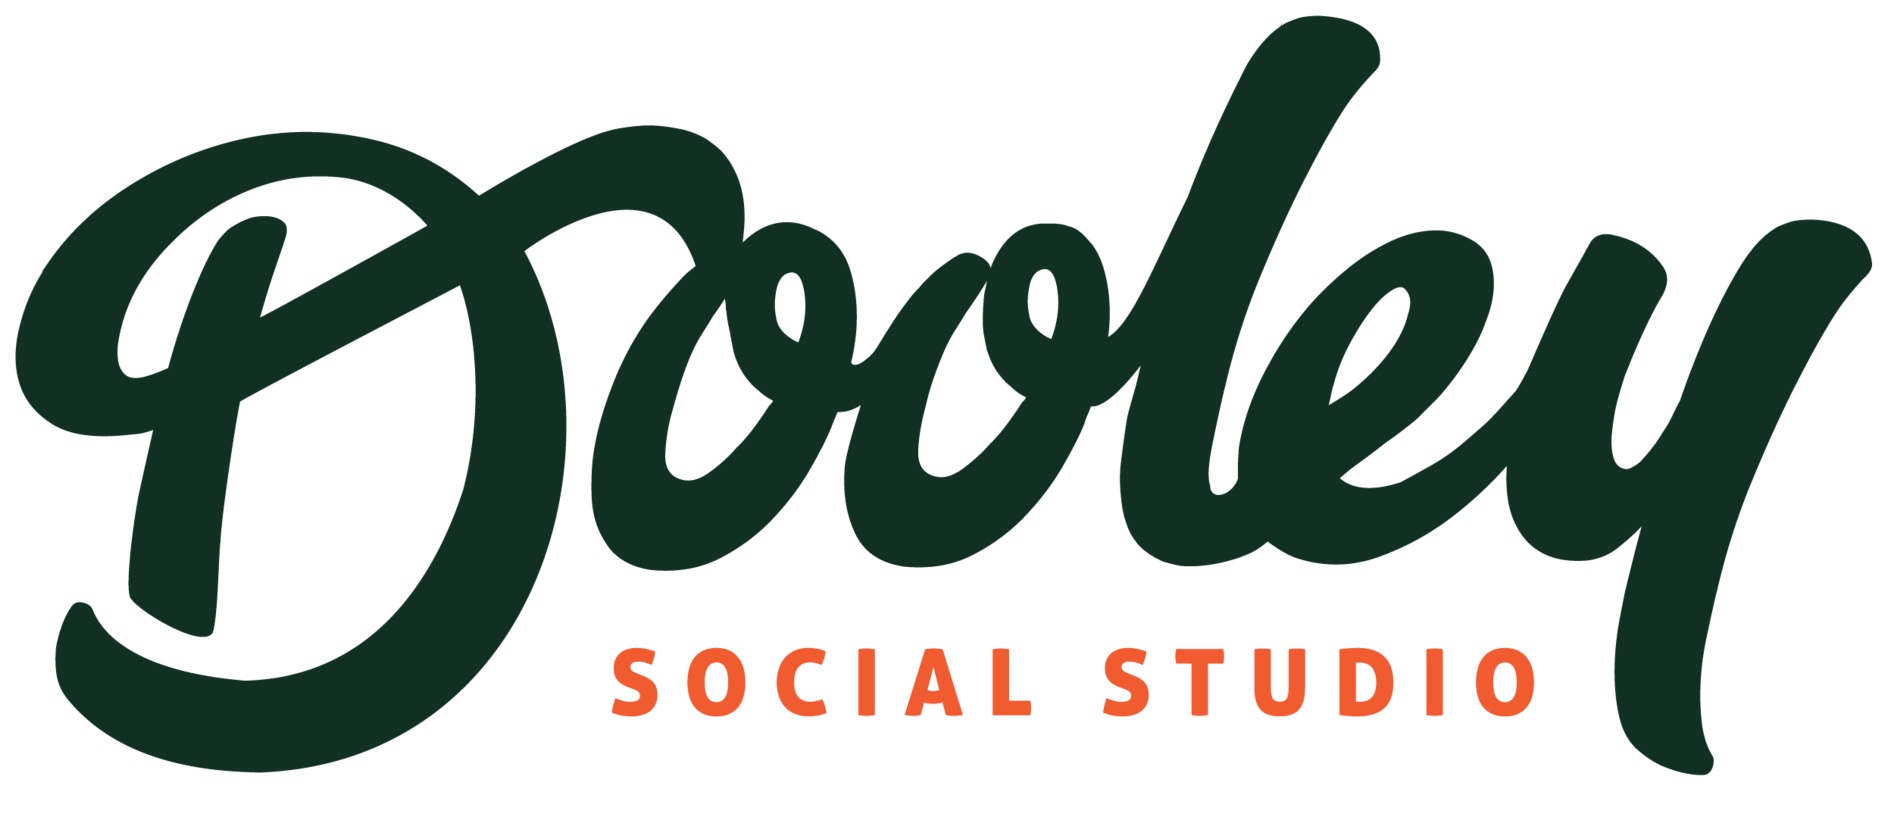 dooley social logo